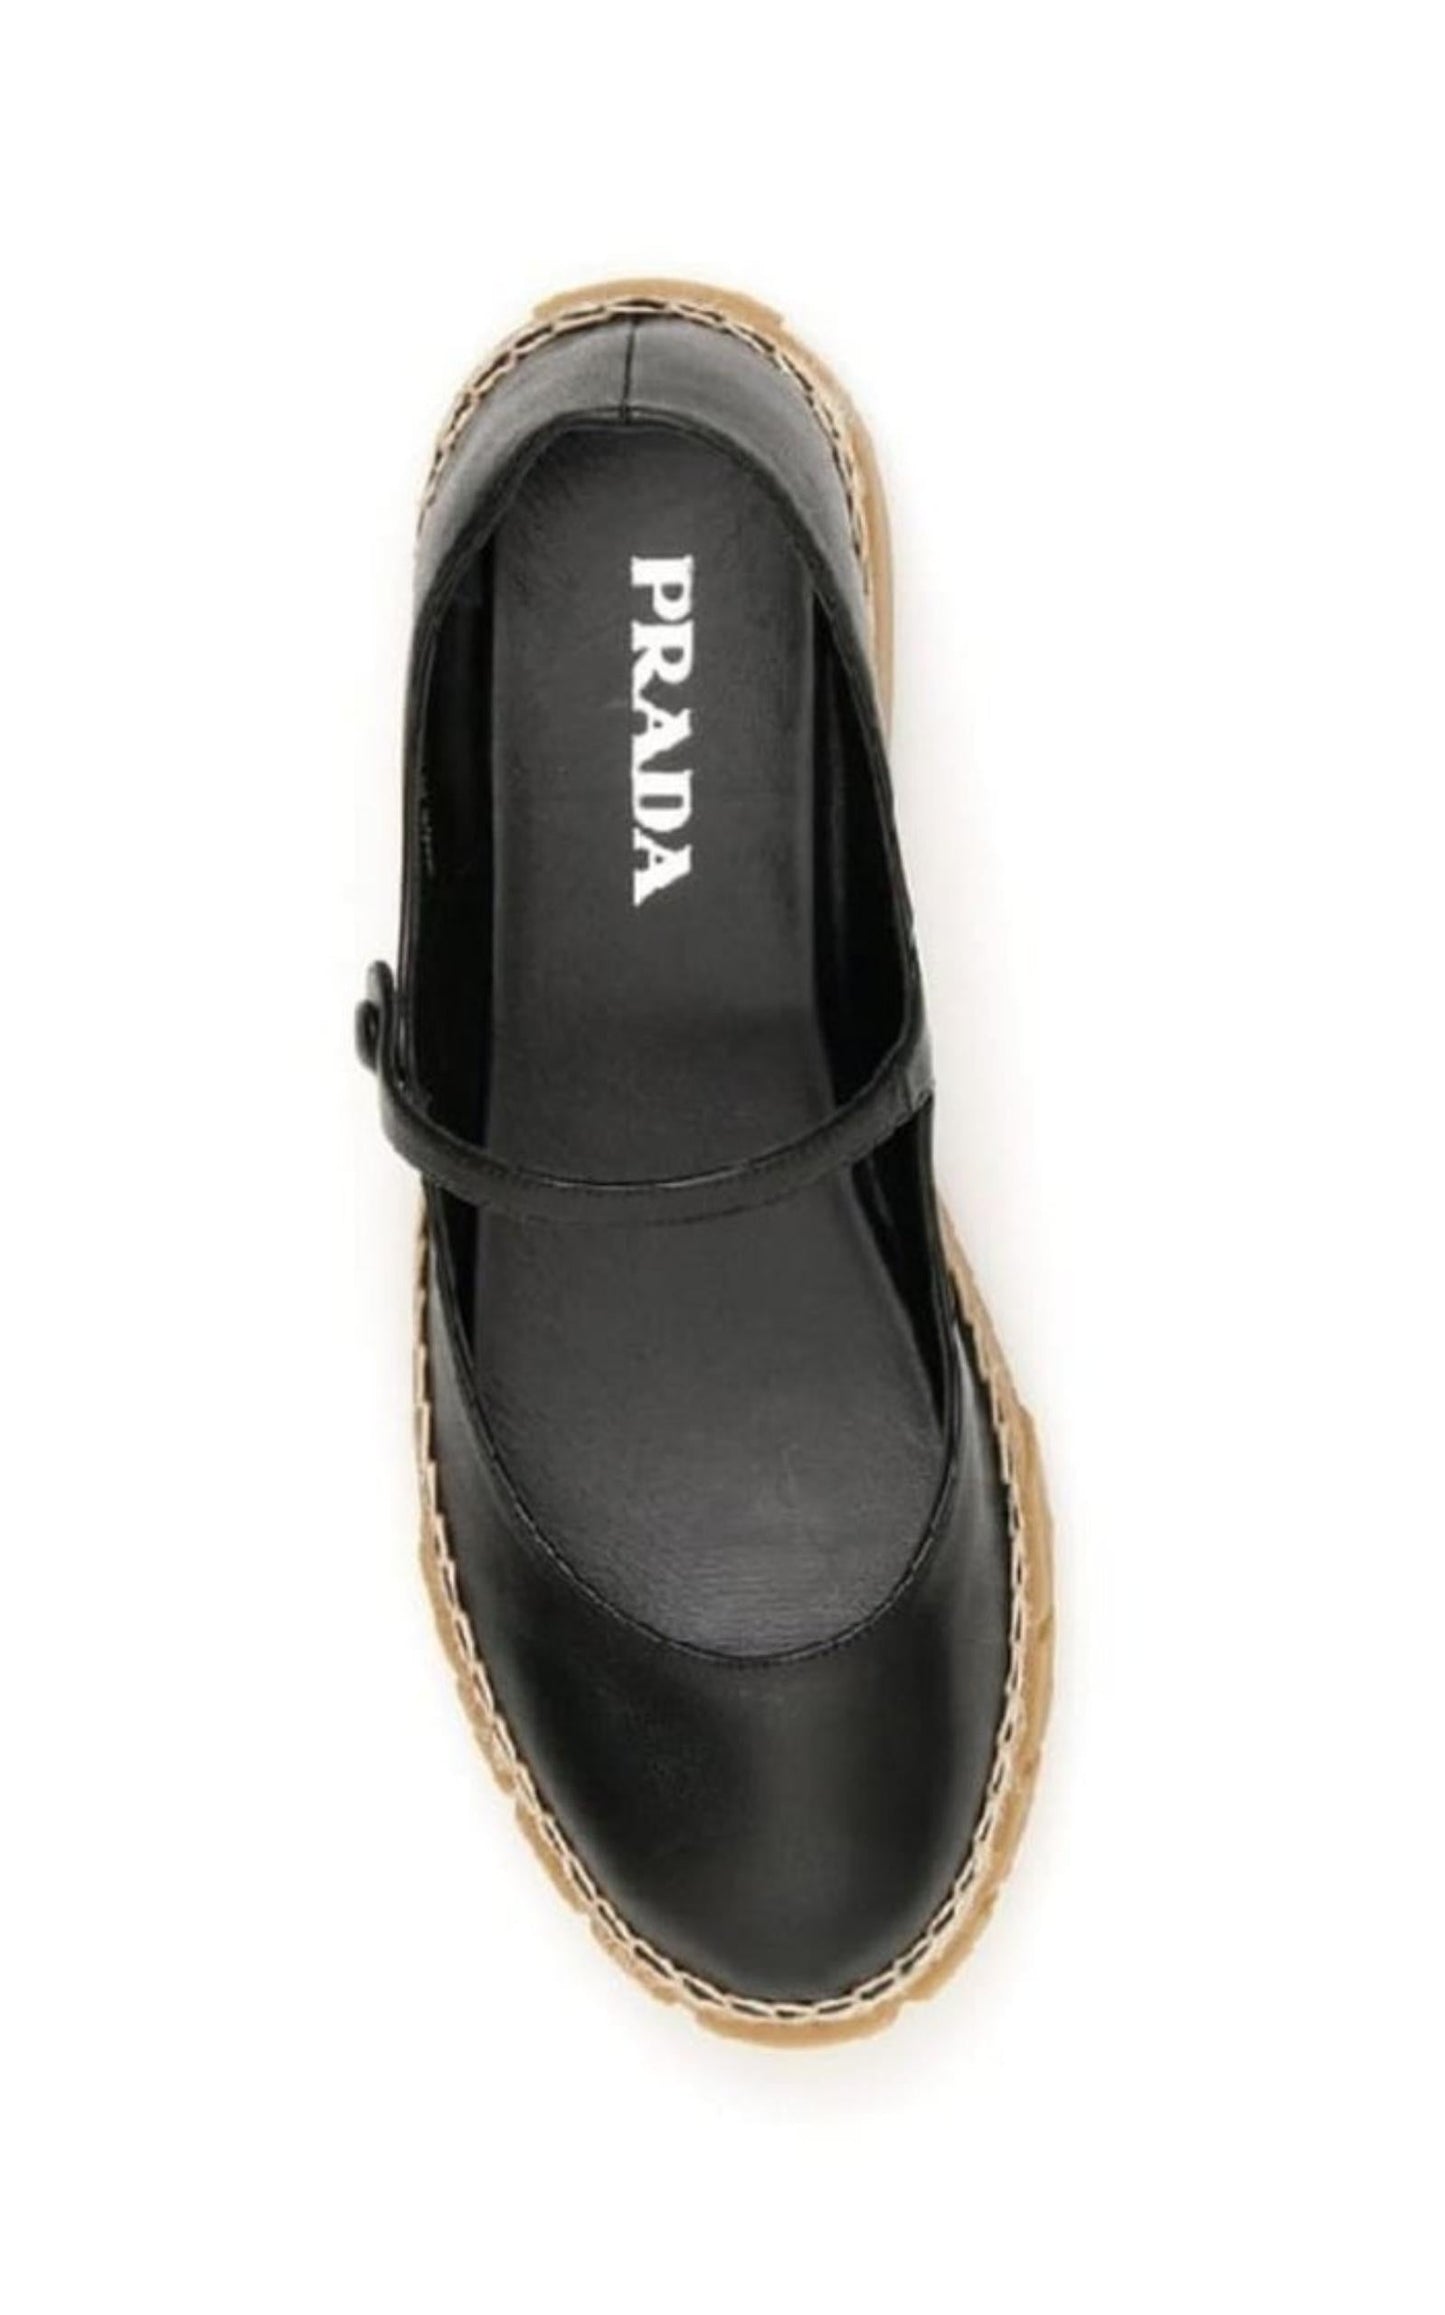  PradaPlatform Mary Janes Leather Shoes - Runway Catalog